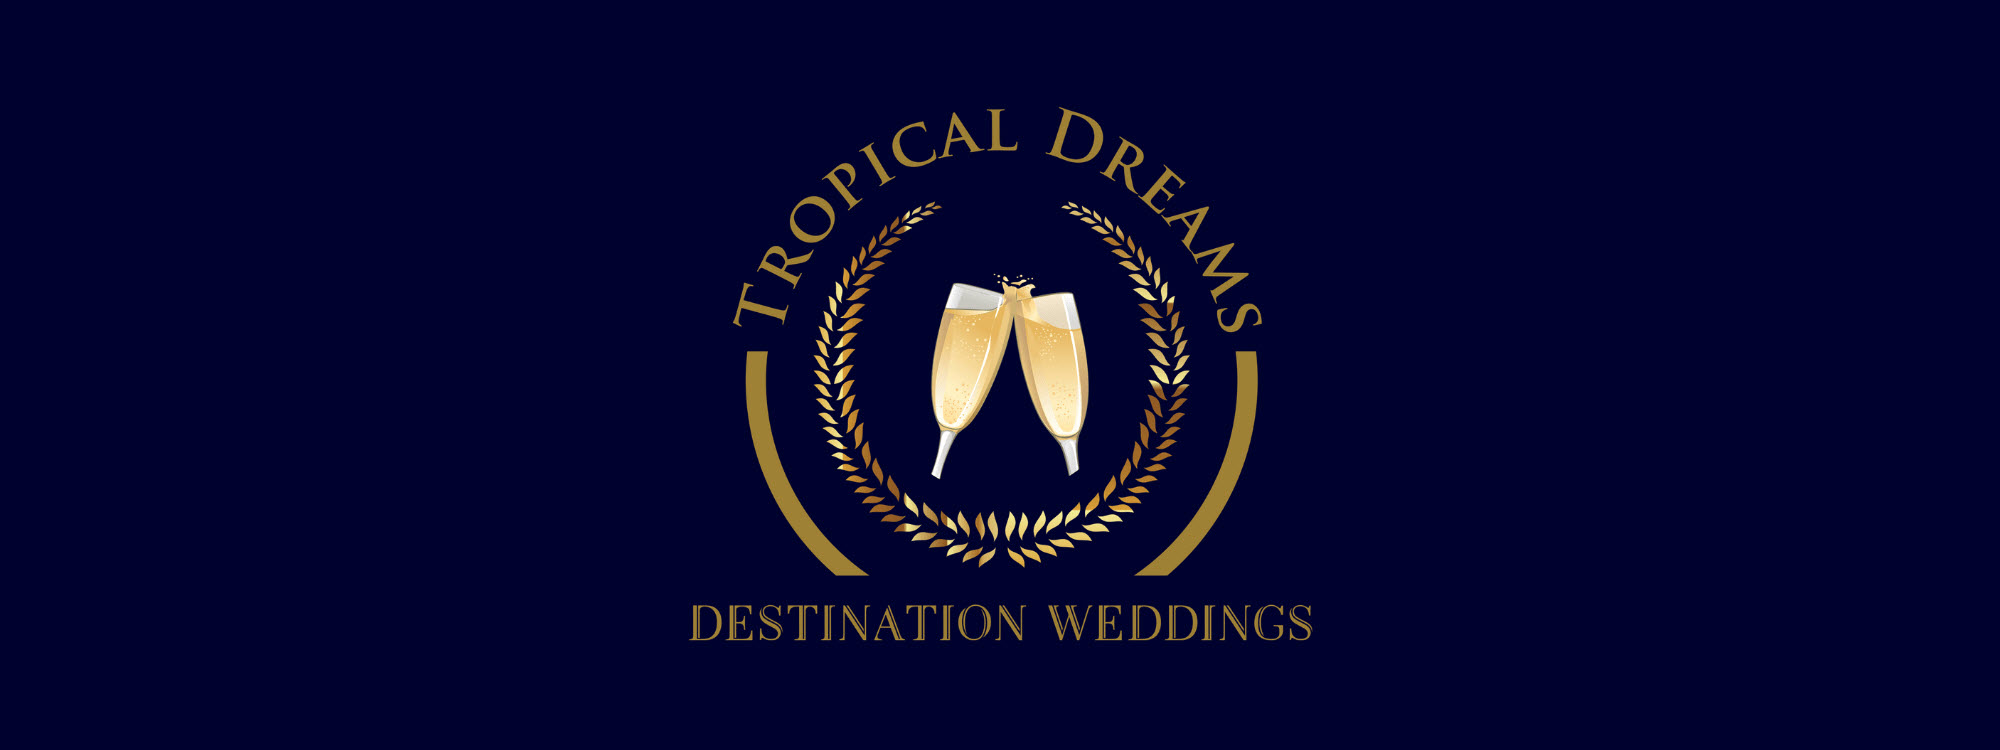 Tropical Dreams Travel | Destination Weddings